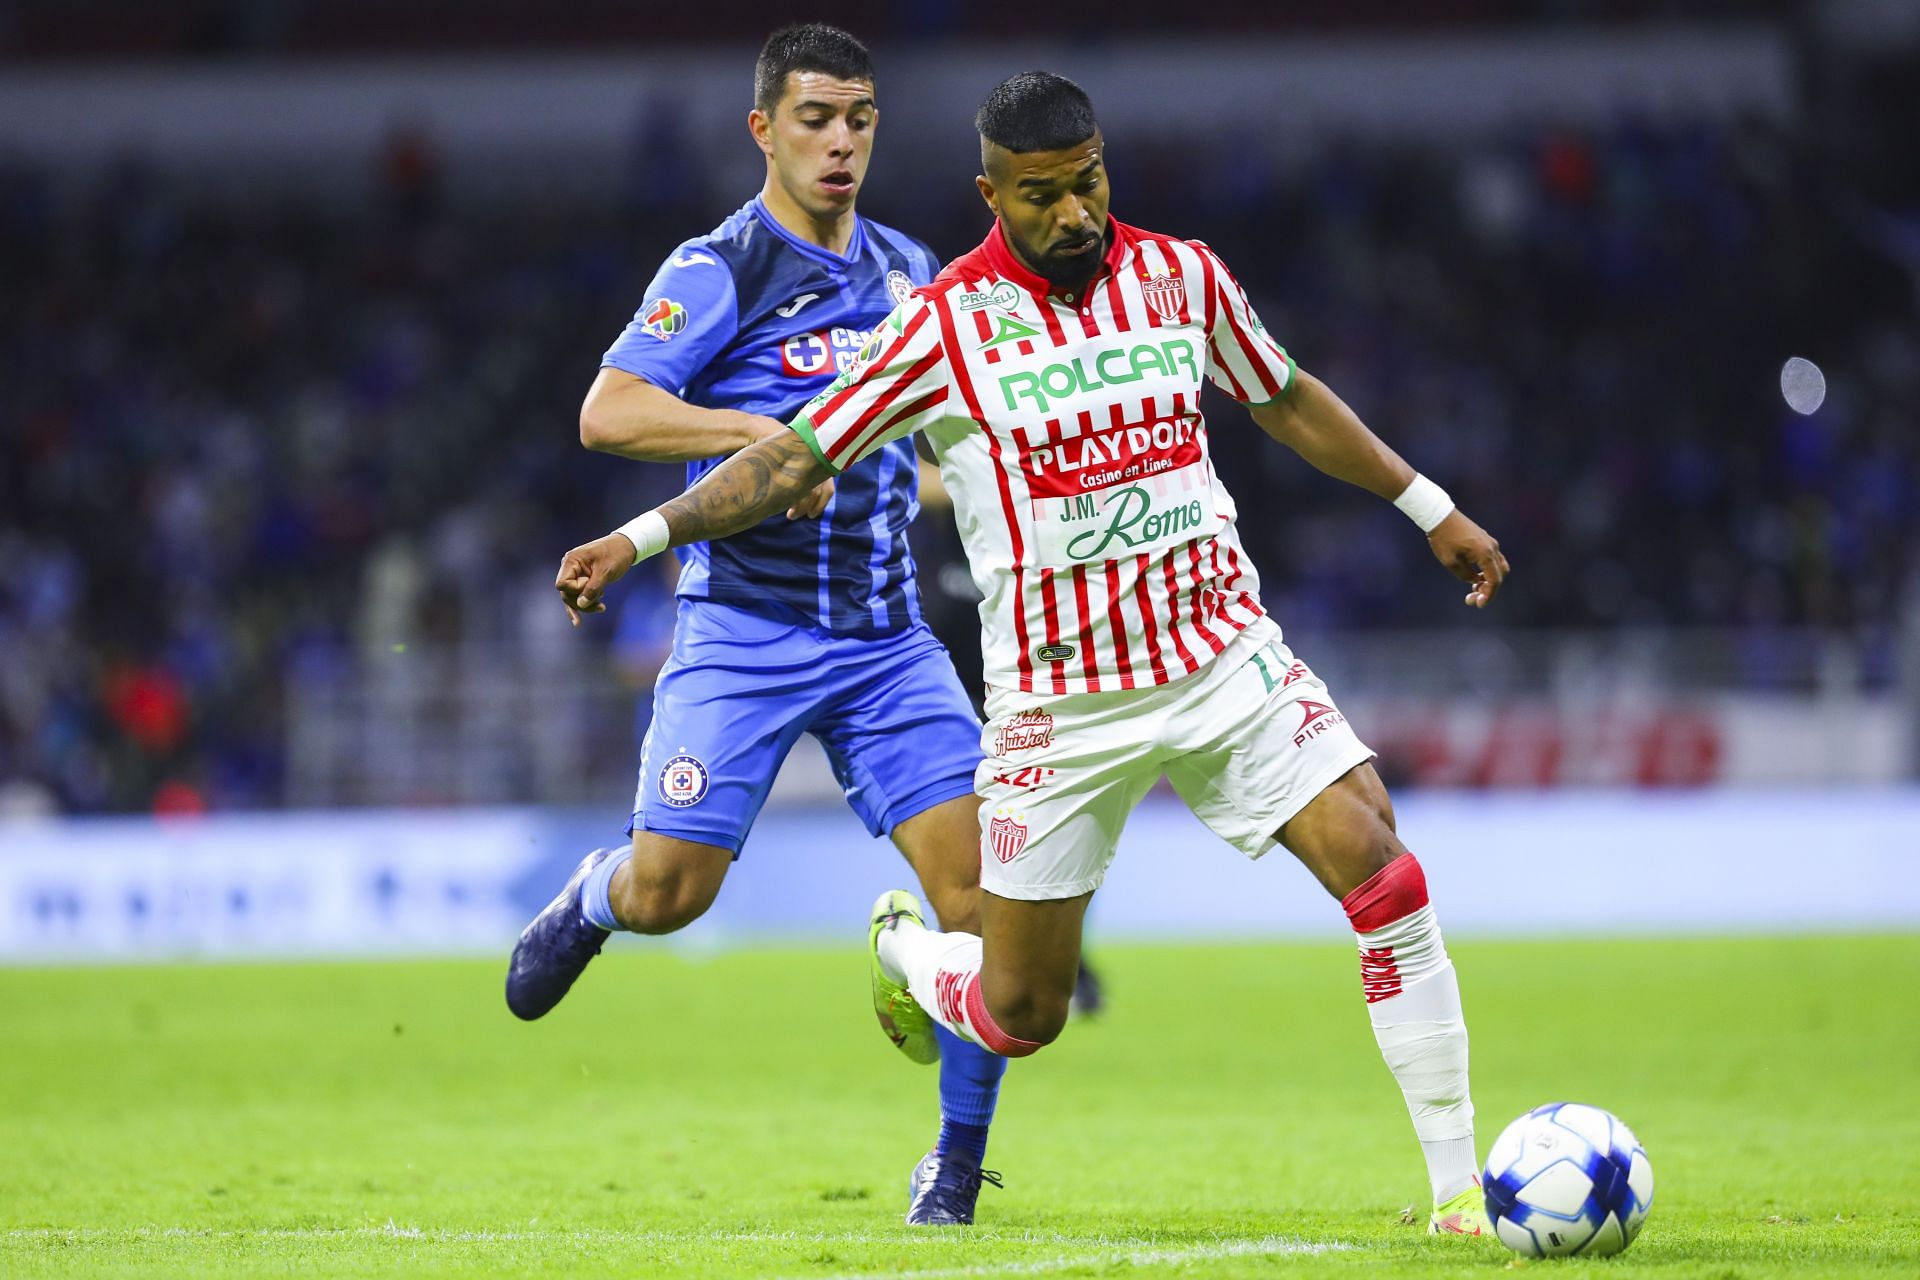 Cruz Azul and Necaxa go head-to-head in their upcoming Liga MX fixture on Saturday